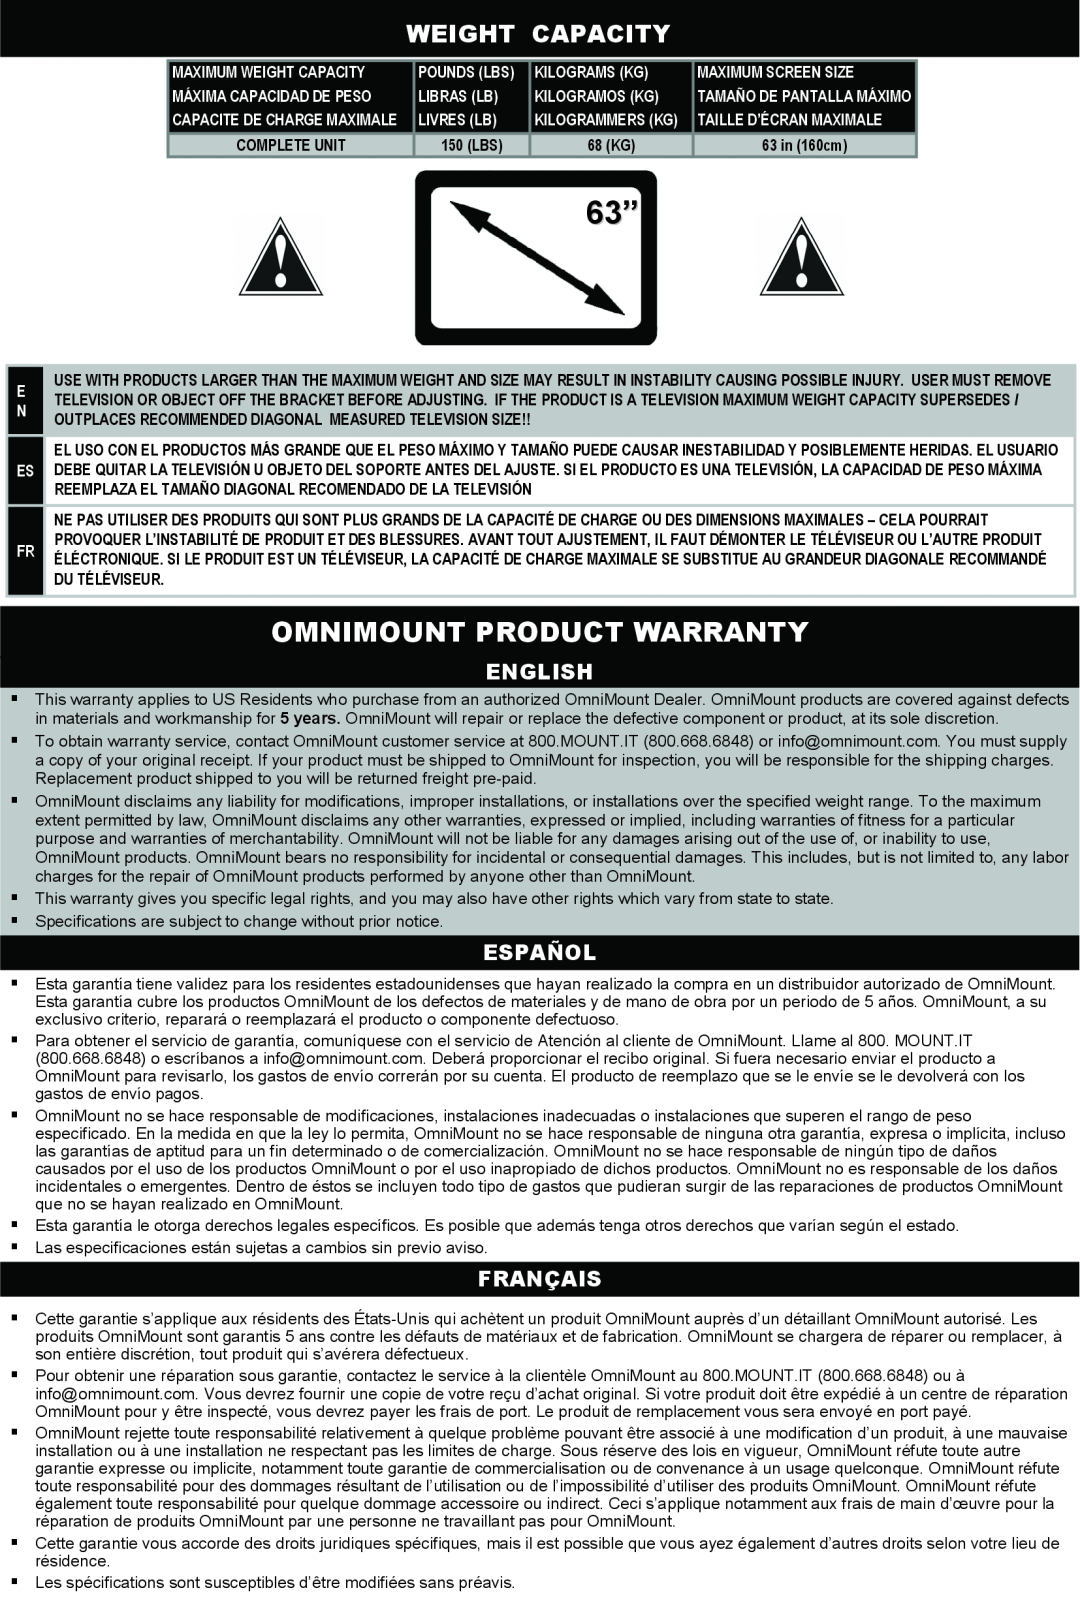 Omnimount OL150F, 10322 manual Omnimount Product Warranty, Weight Capacity, English, Español, Français 